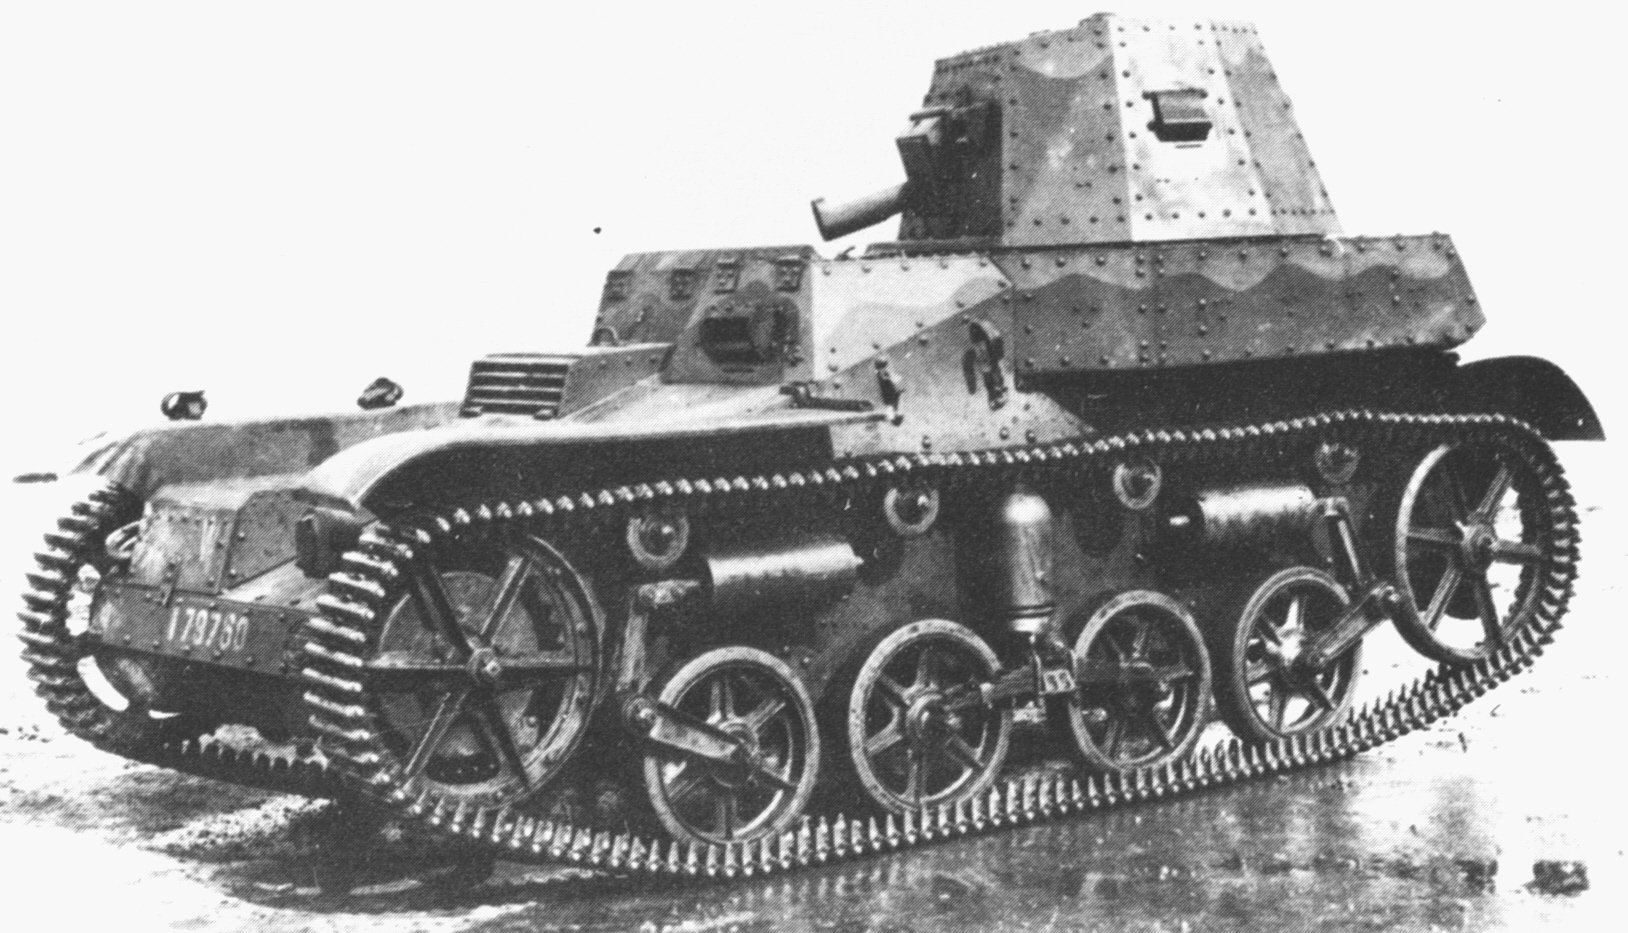 AMR 33 prototype light tank (vehicle number 79760), 1933